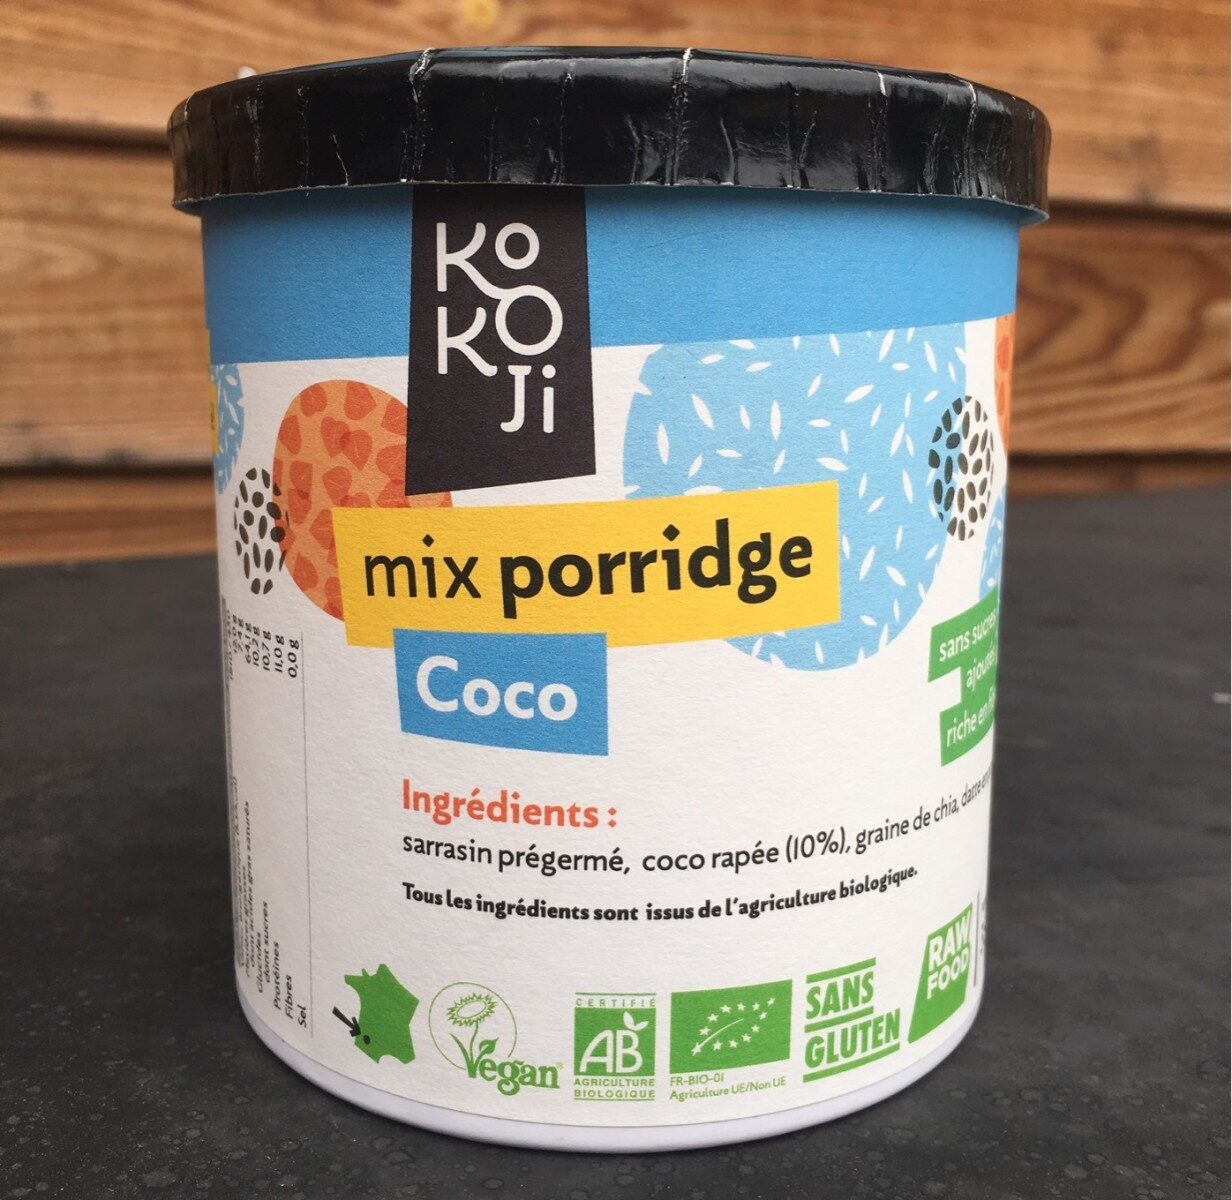 Mix porridge Coco - Product - fr